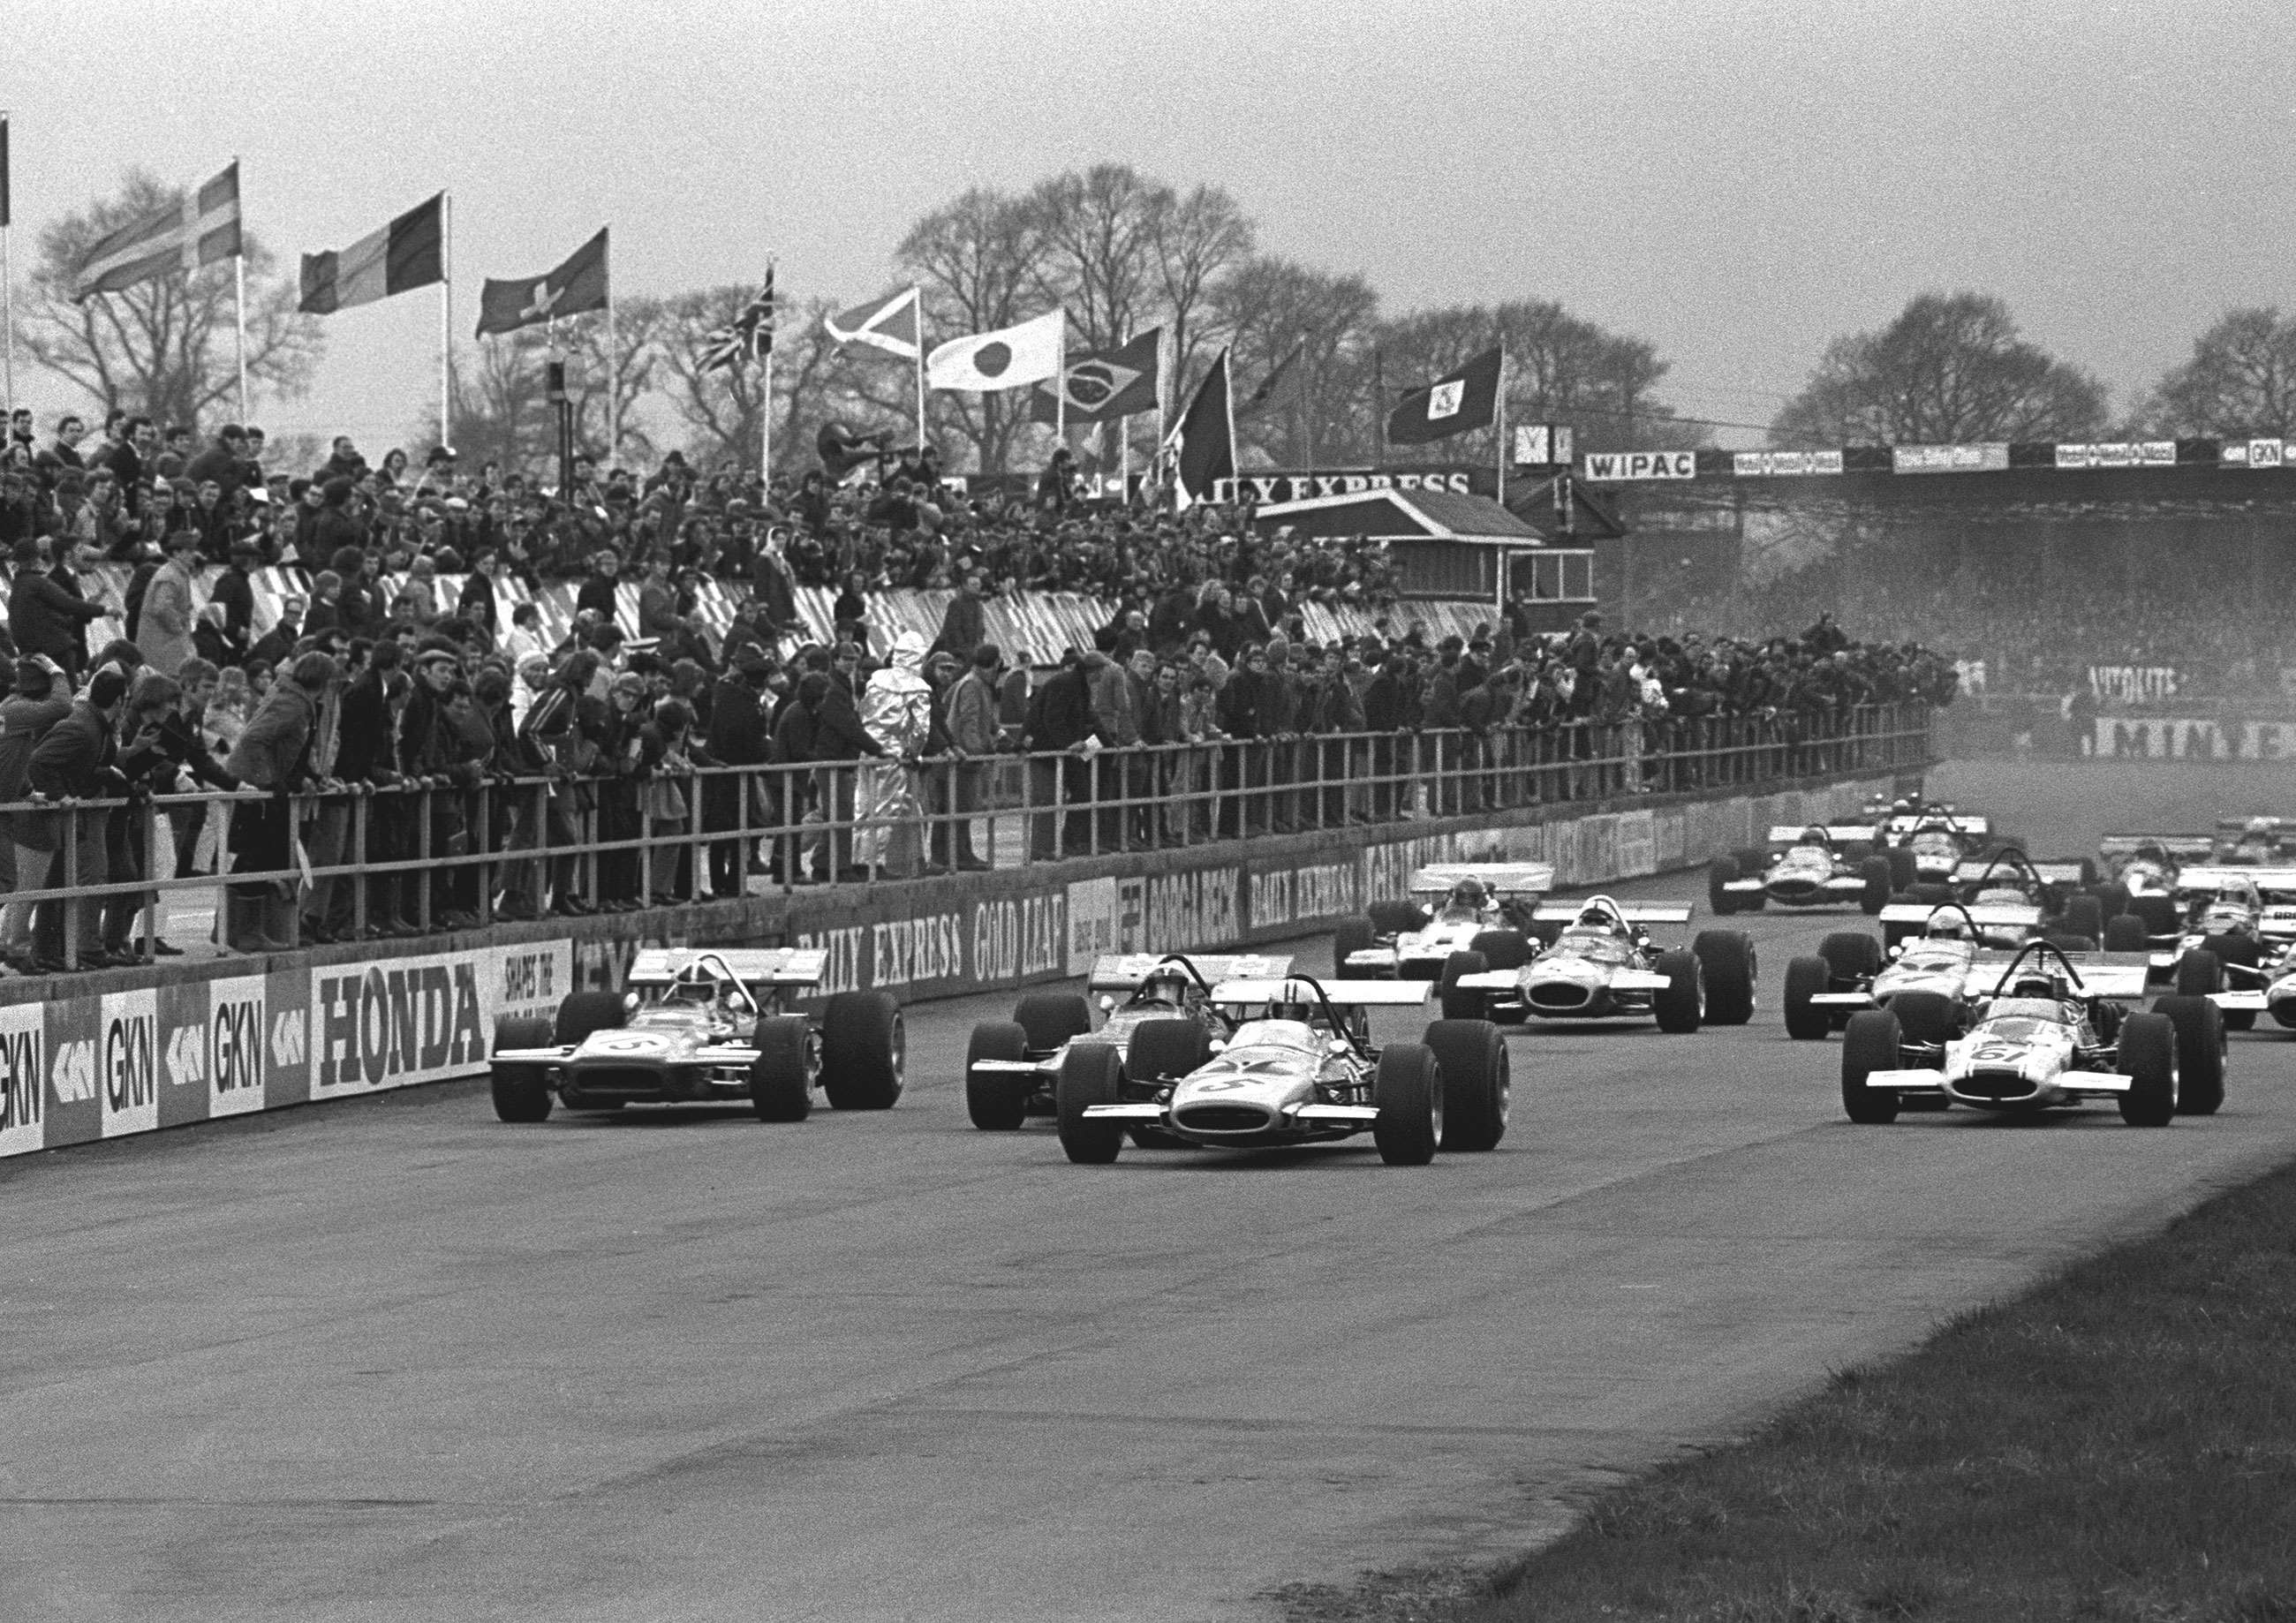 f1-1970-brdc-international-trophy-silverstone-race-start-chris-amon-march-cosworth-701-left-david-phipps-motorsport-images-goodwood-20042020.jpg